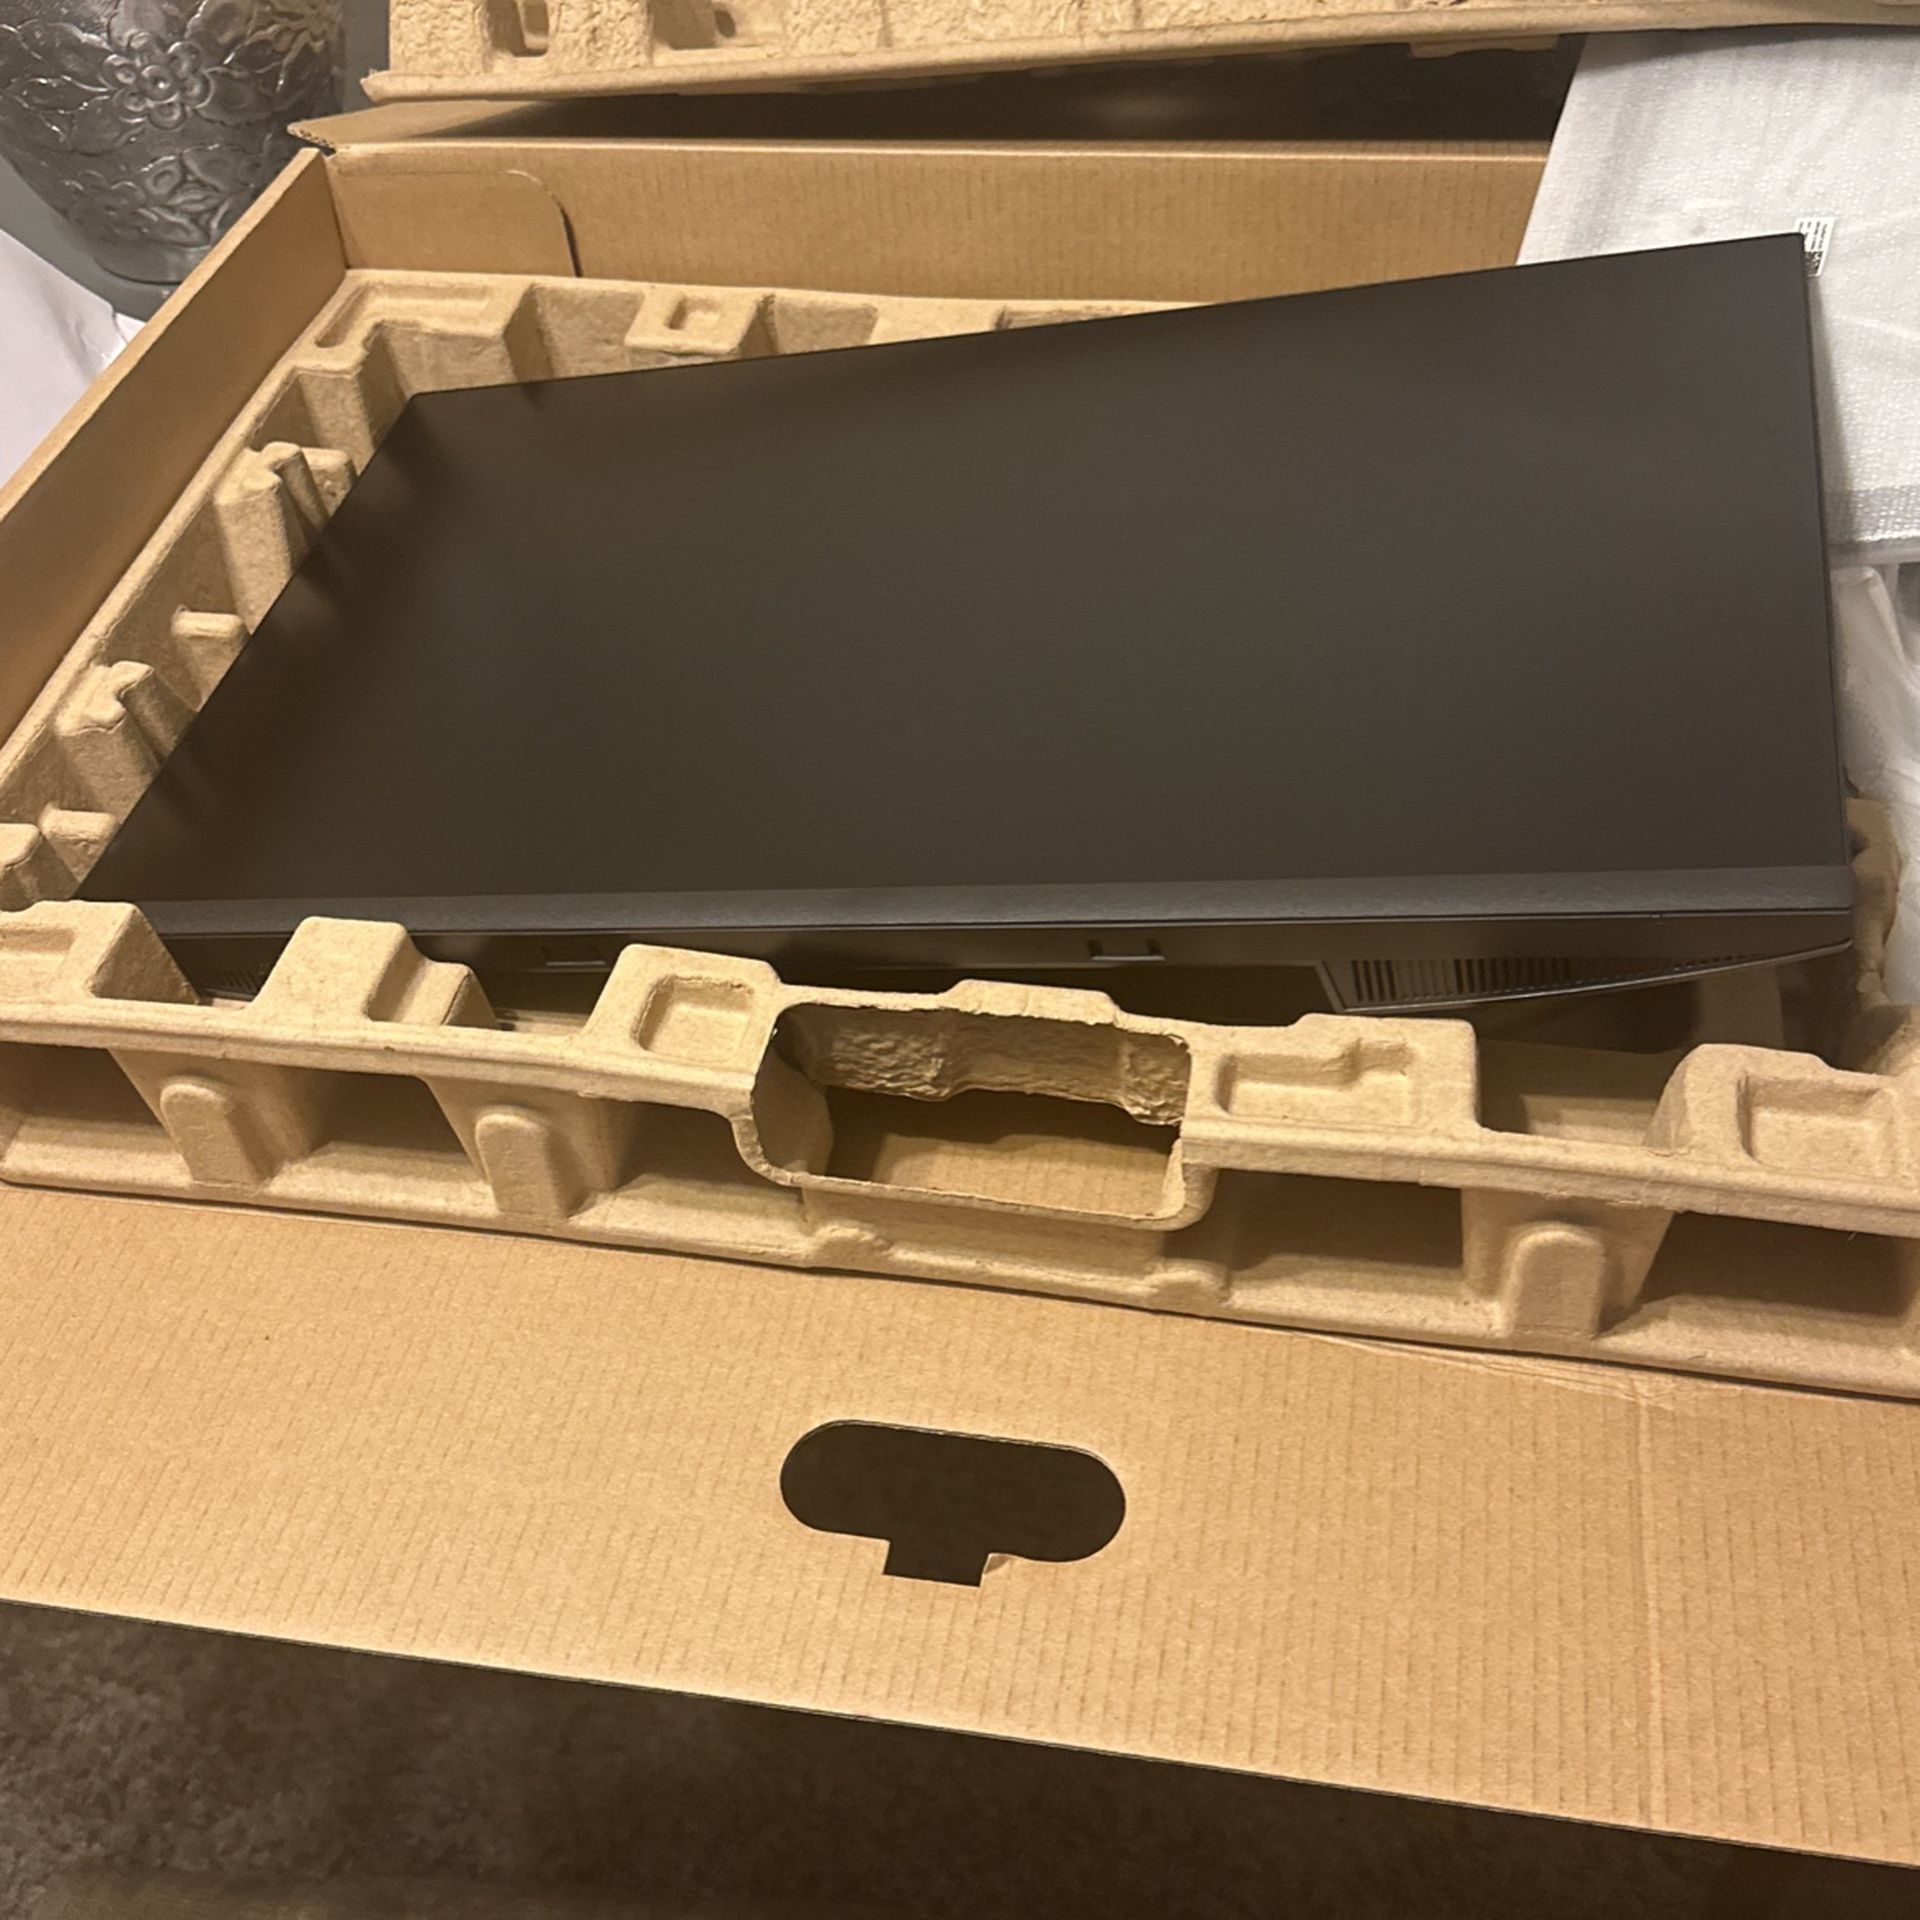 2 Dell monitor (brand new) Still In Box